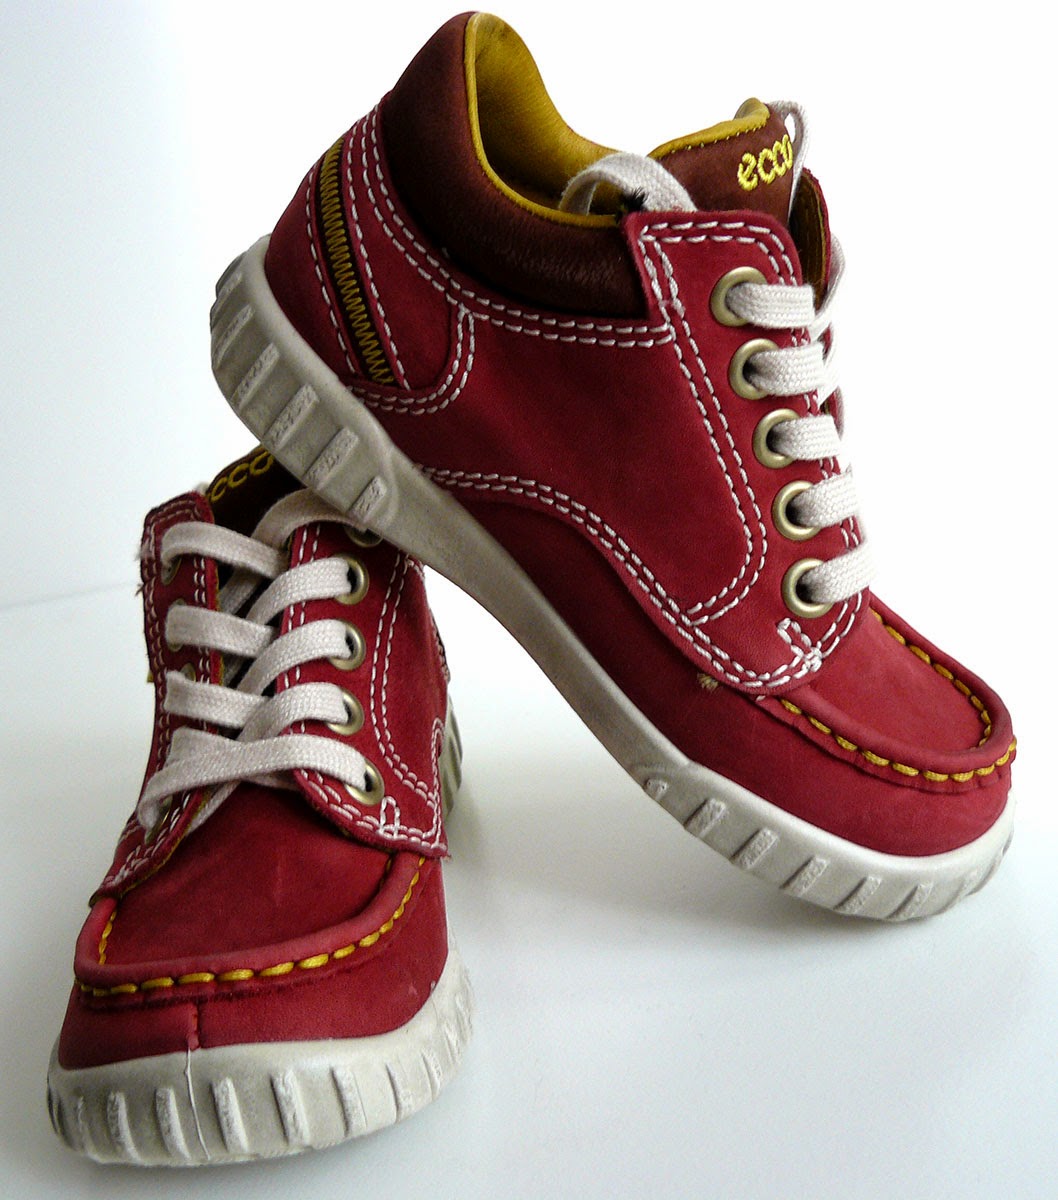 Обувь краус отзывы. Lisette 3395-07 97 обувь. Craus ботинки. Cenicenice обувь. Фирма Краус обувь производитель.